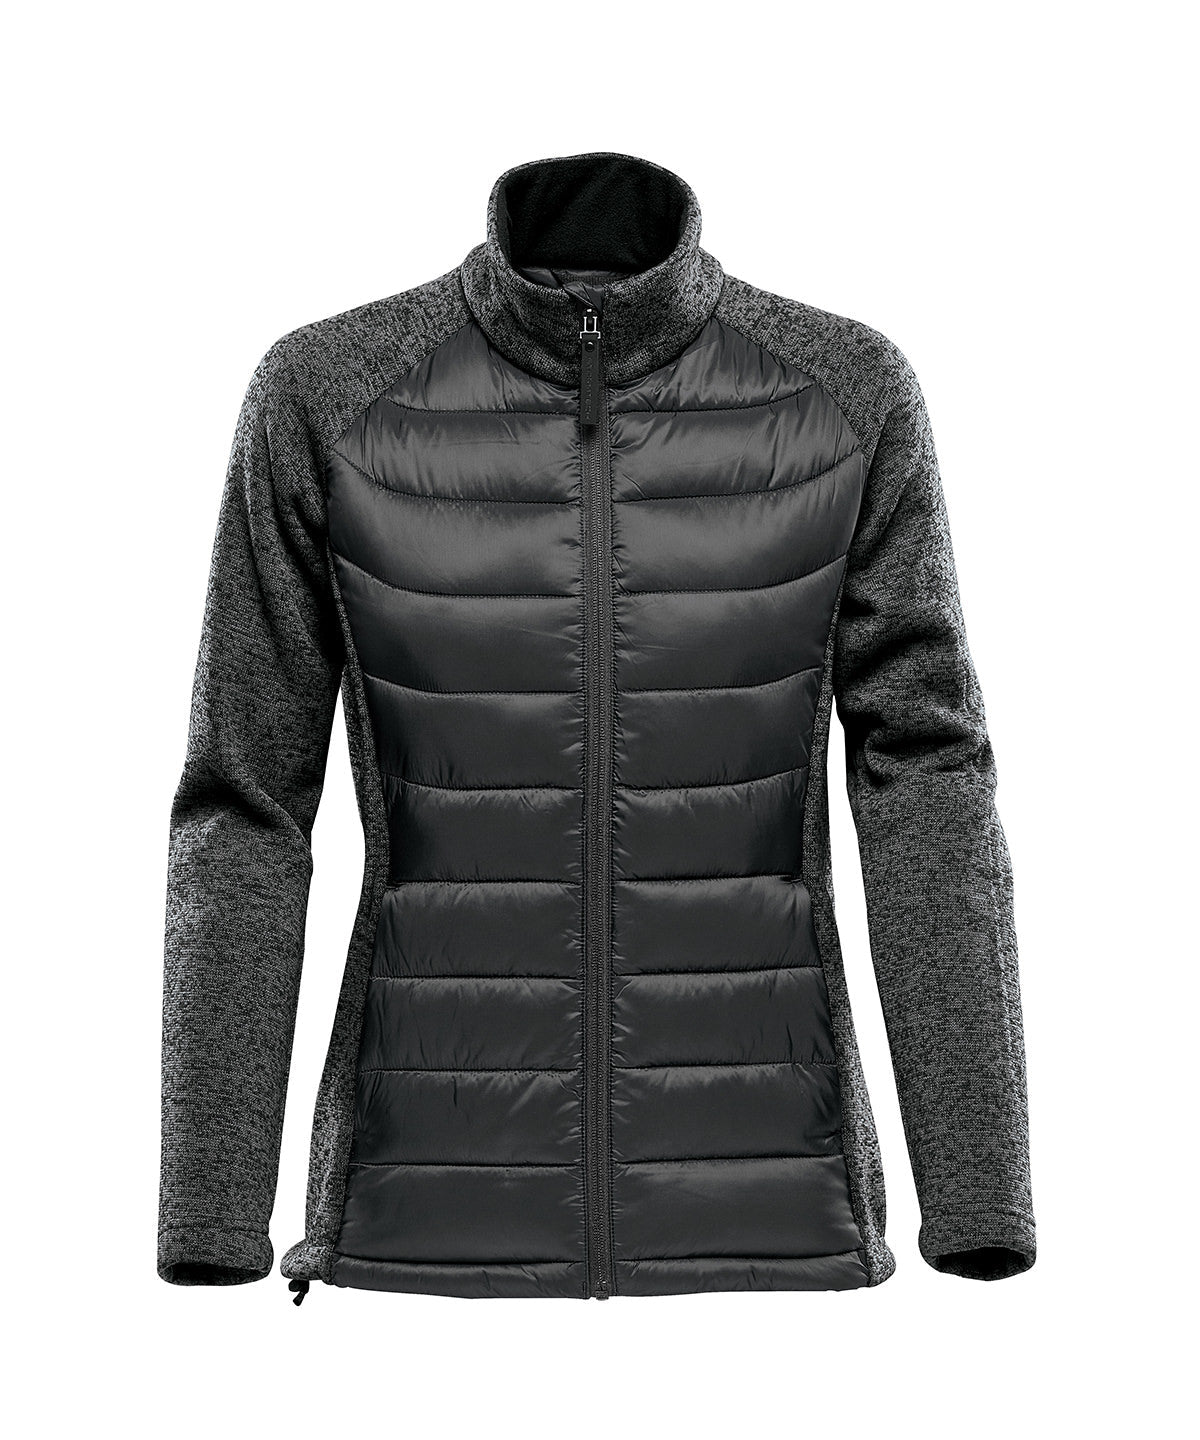 Stormtech Women's Narvik Hybrid Jacket